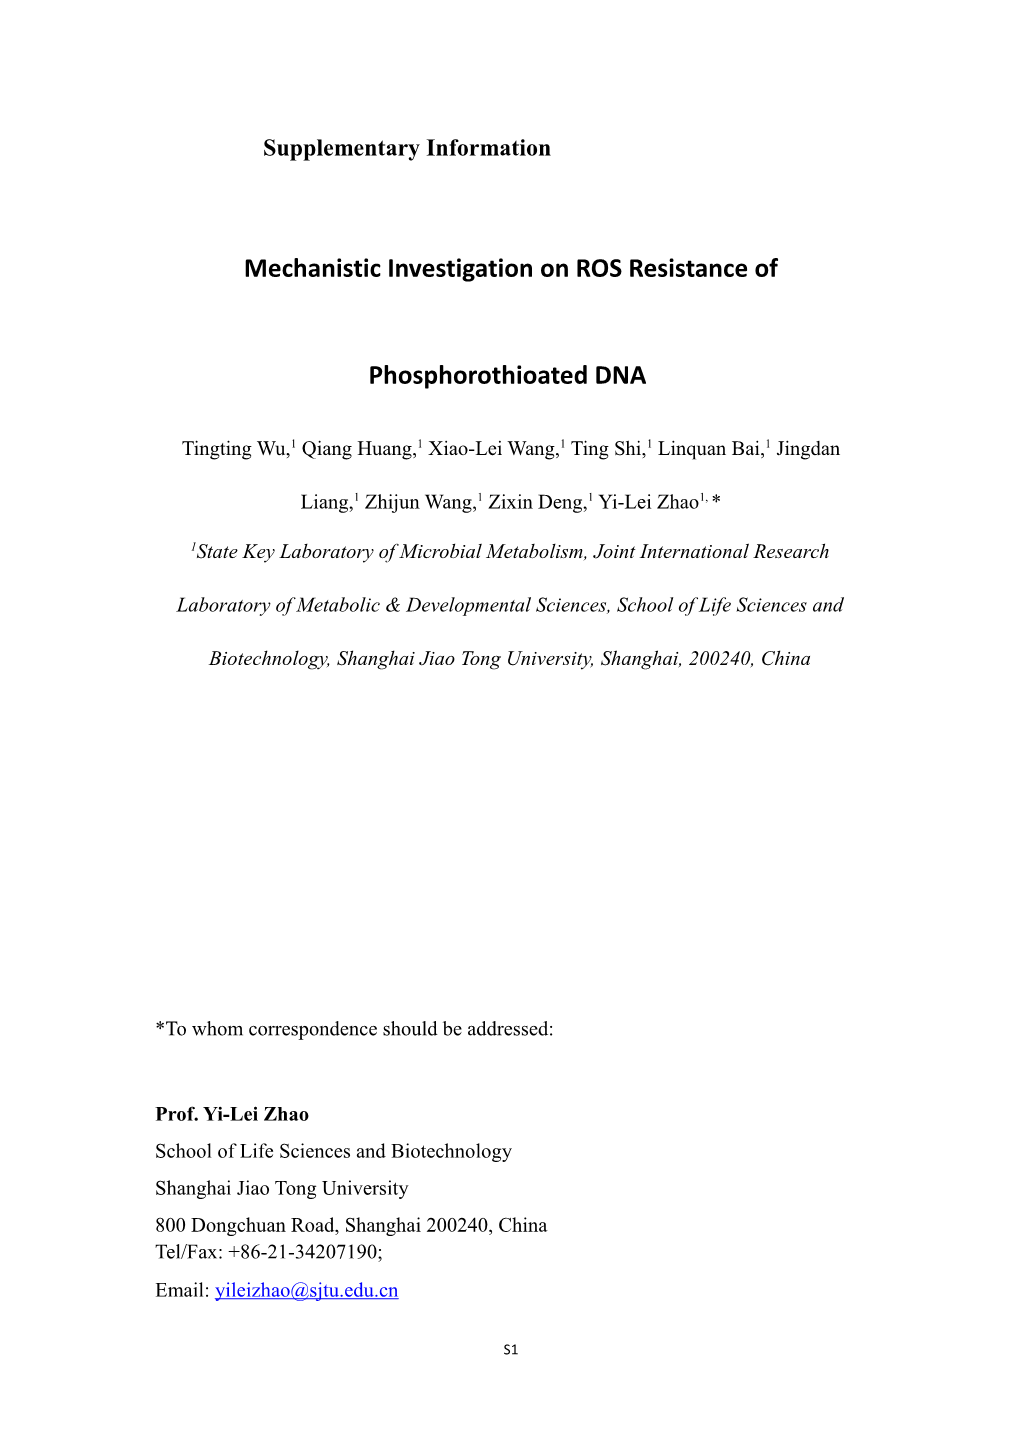 Mechanistic Investigation on ROS Resistanceof Phosphorothioated DNA